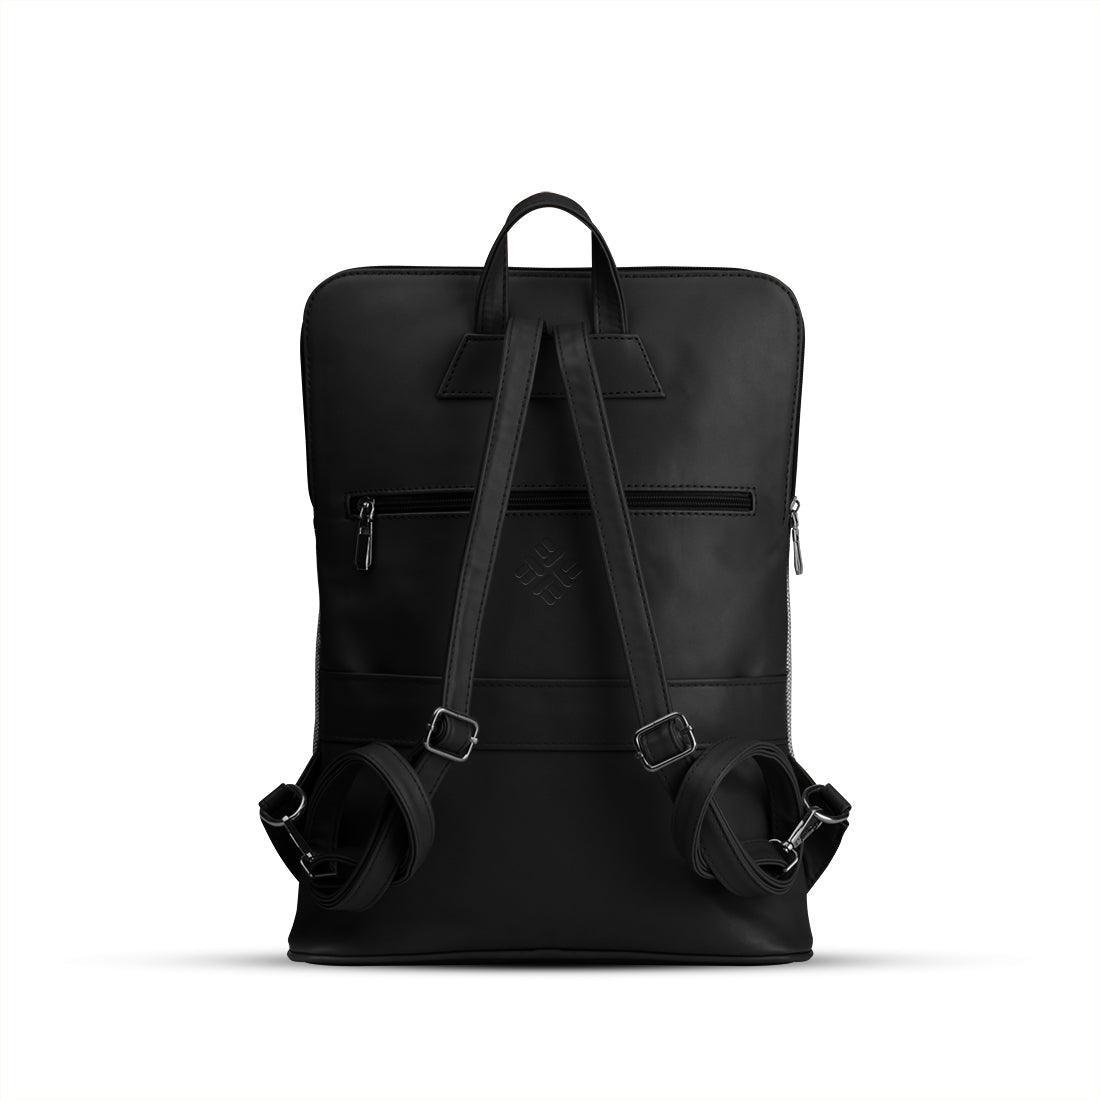 Black Orbit Laptop Backpack pattern - CANVAEGYPT